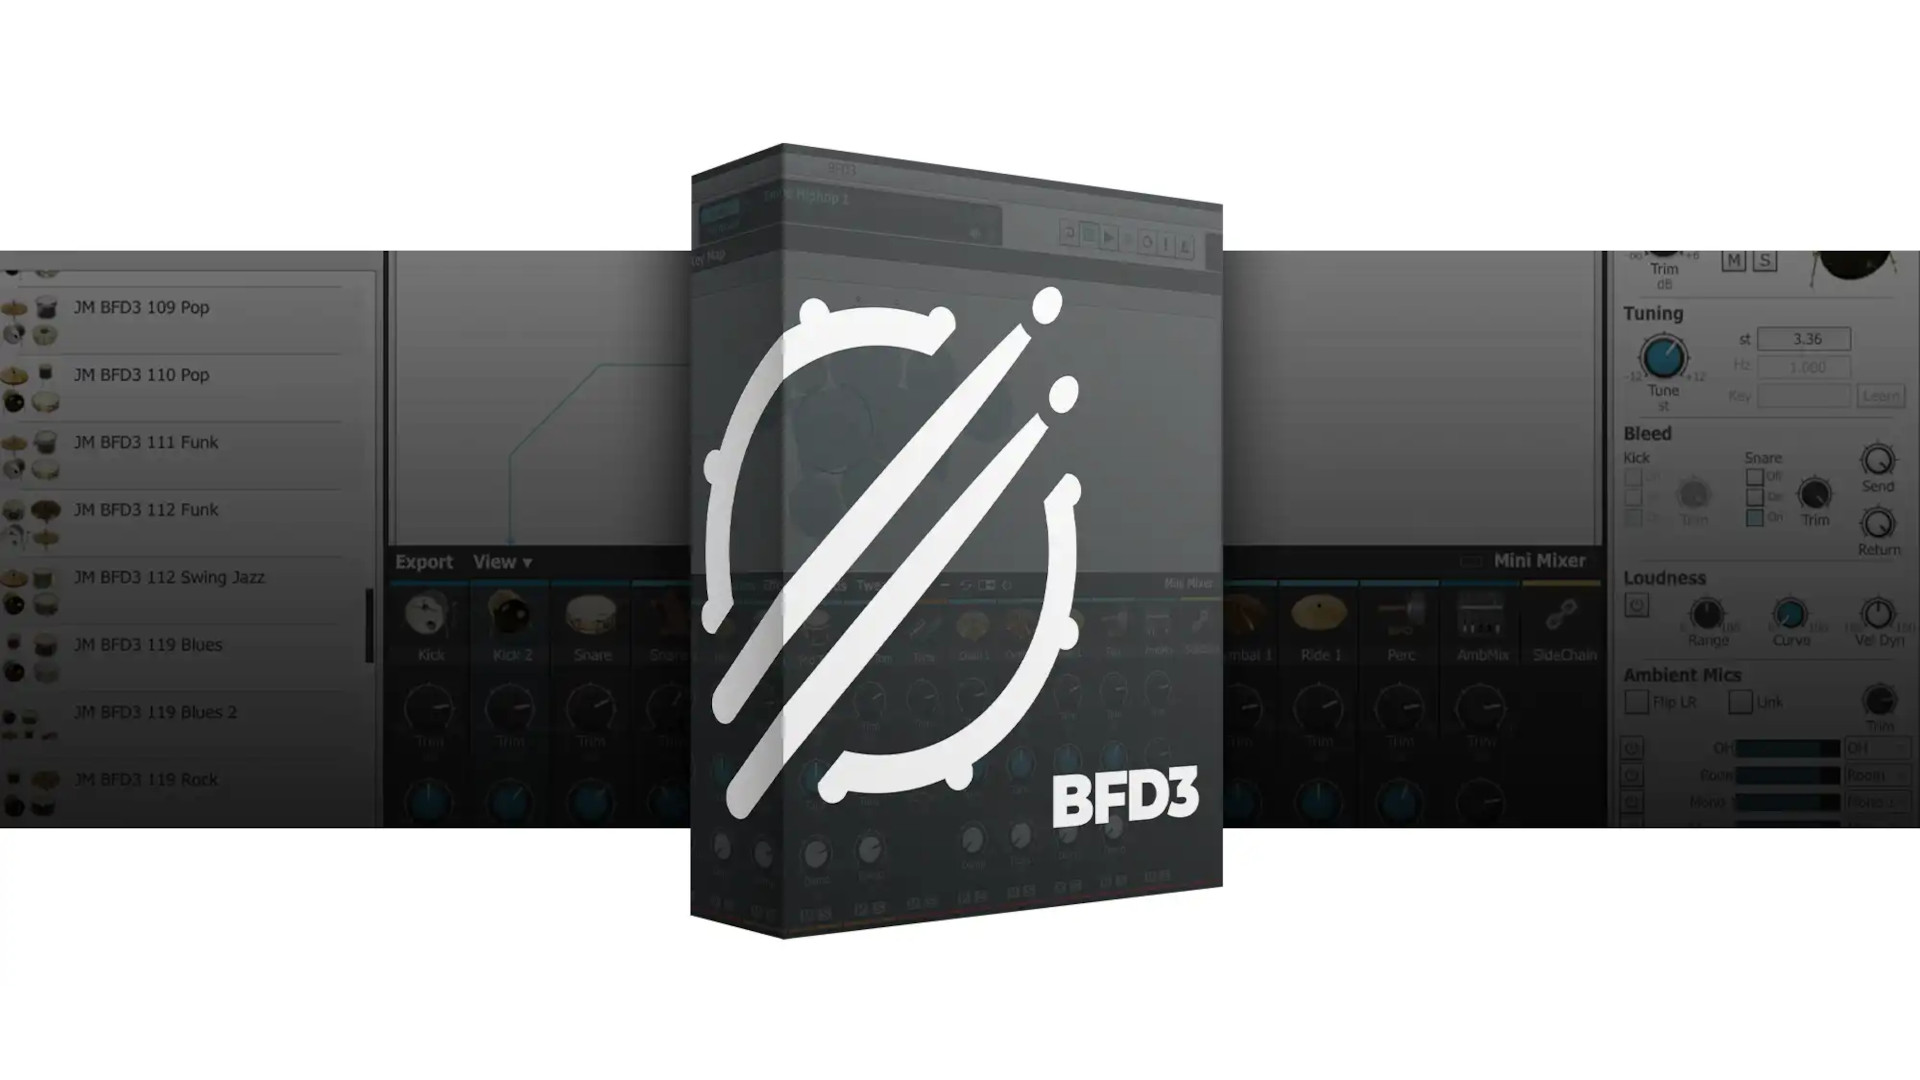 [$ 100.57] inmusic BFD3 PC/MAC CD Key